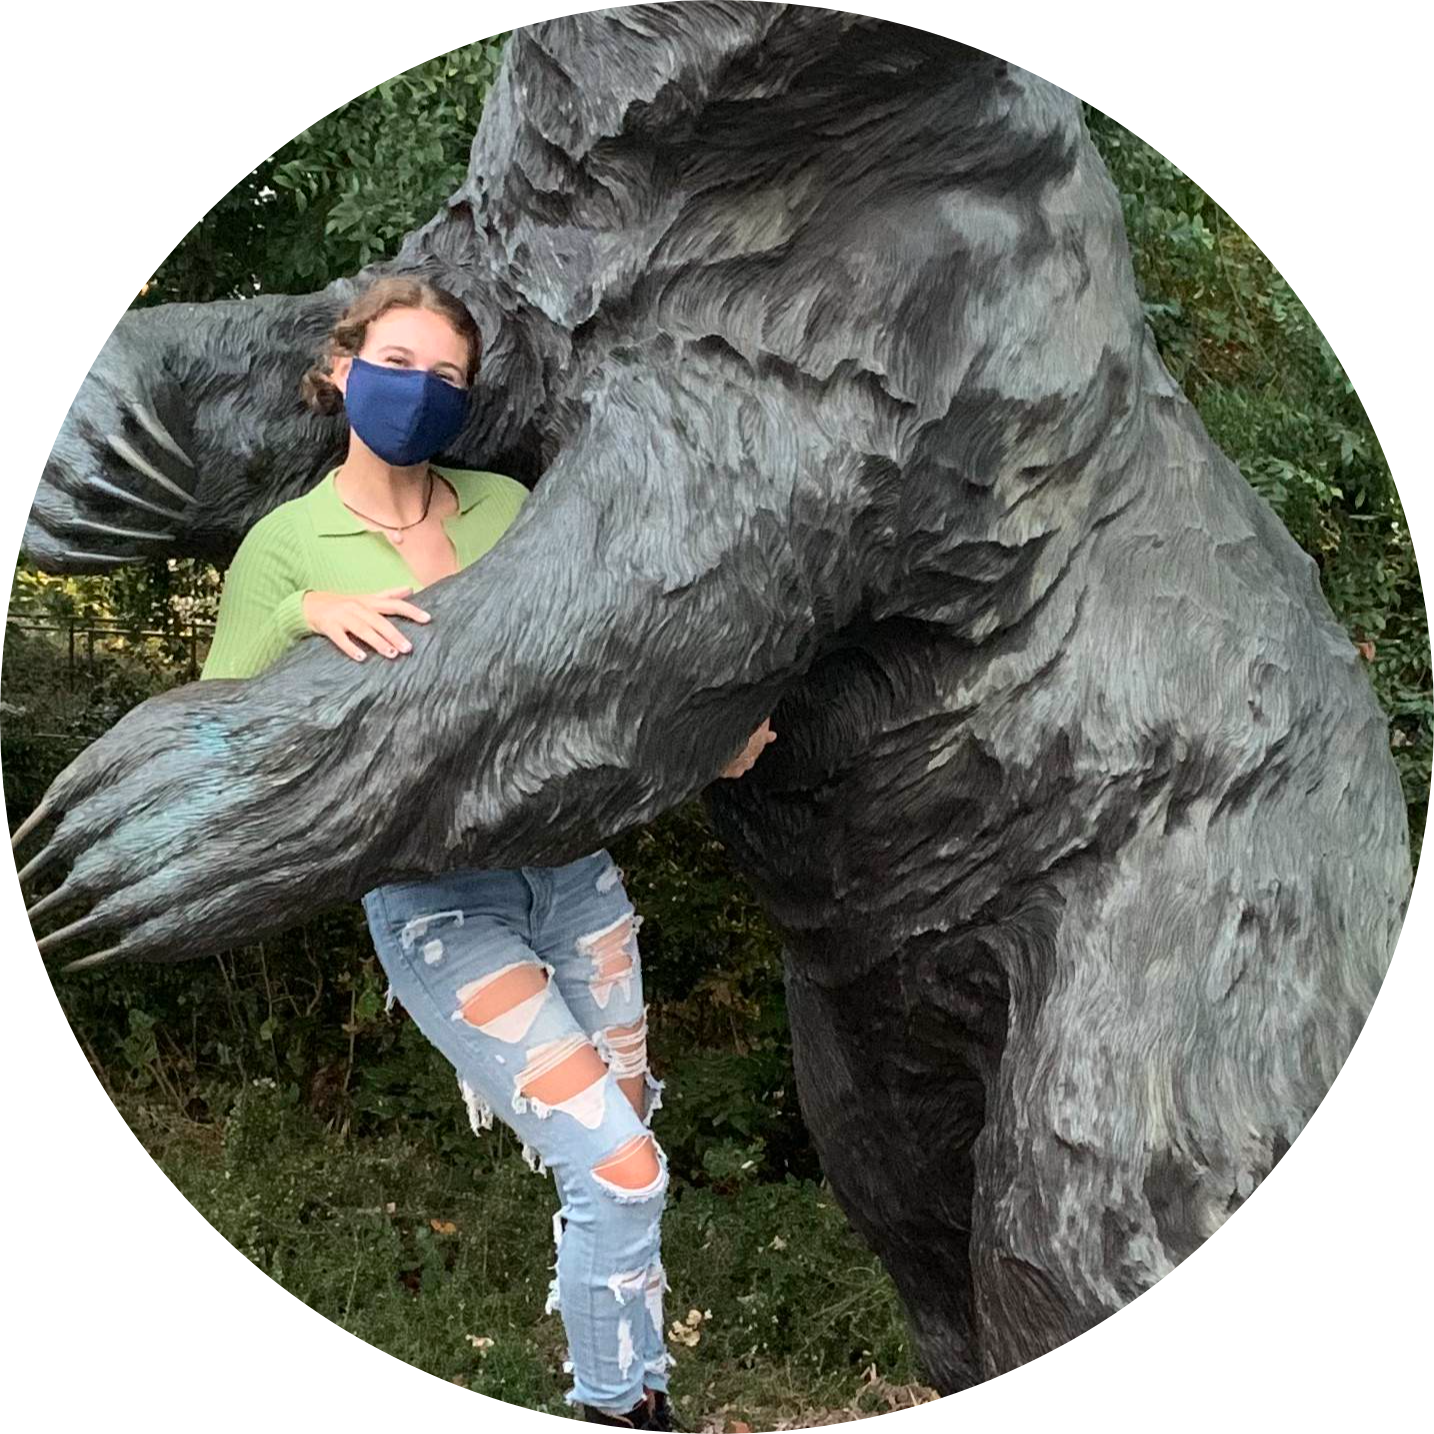 Amanda receiving a Bear hug from a statue